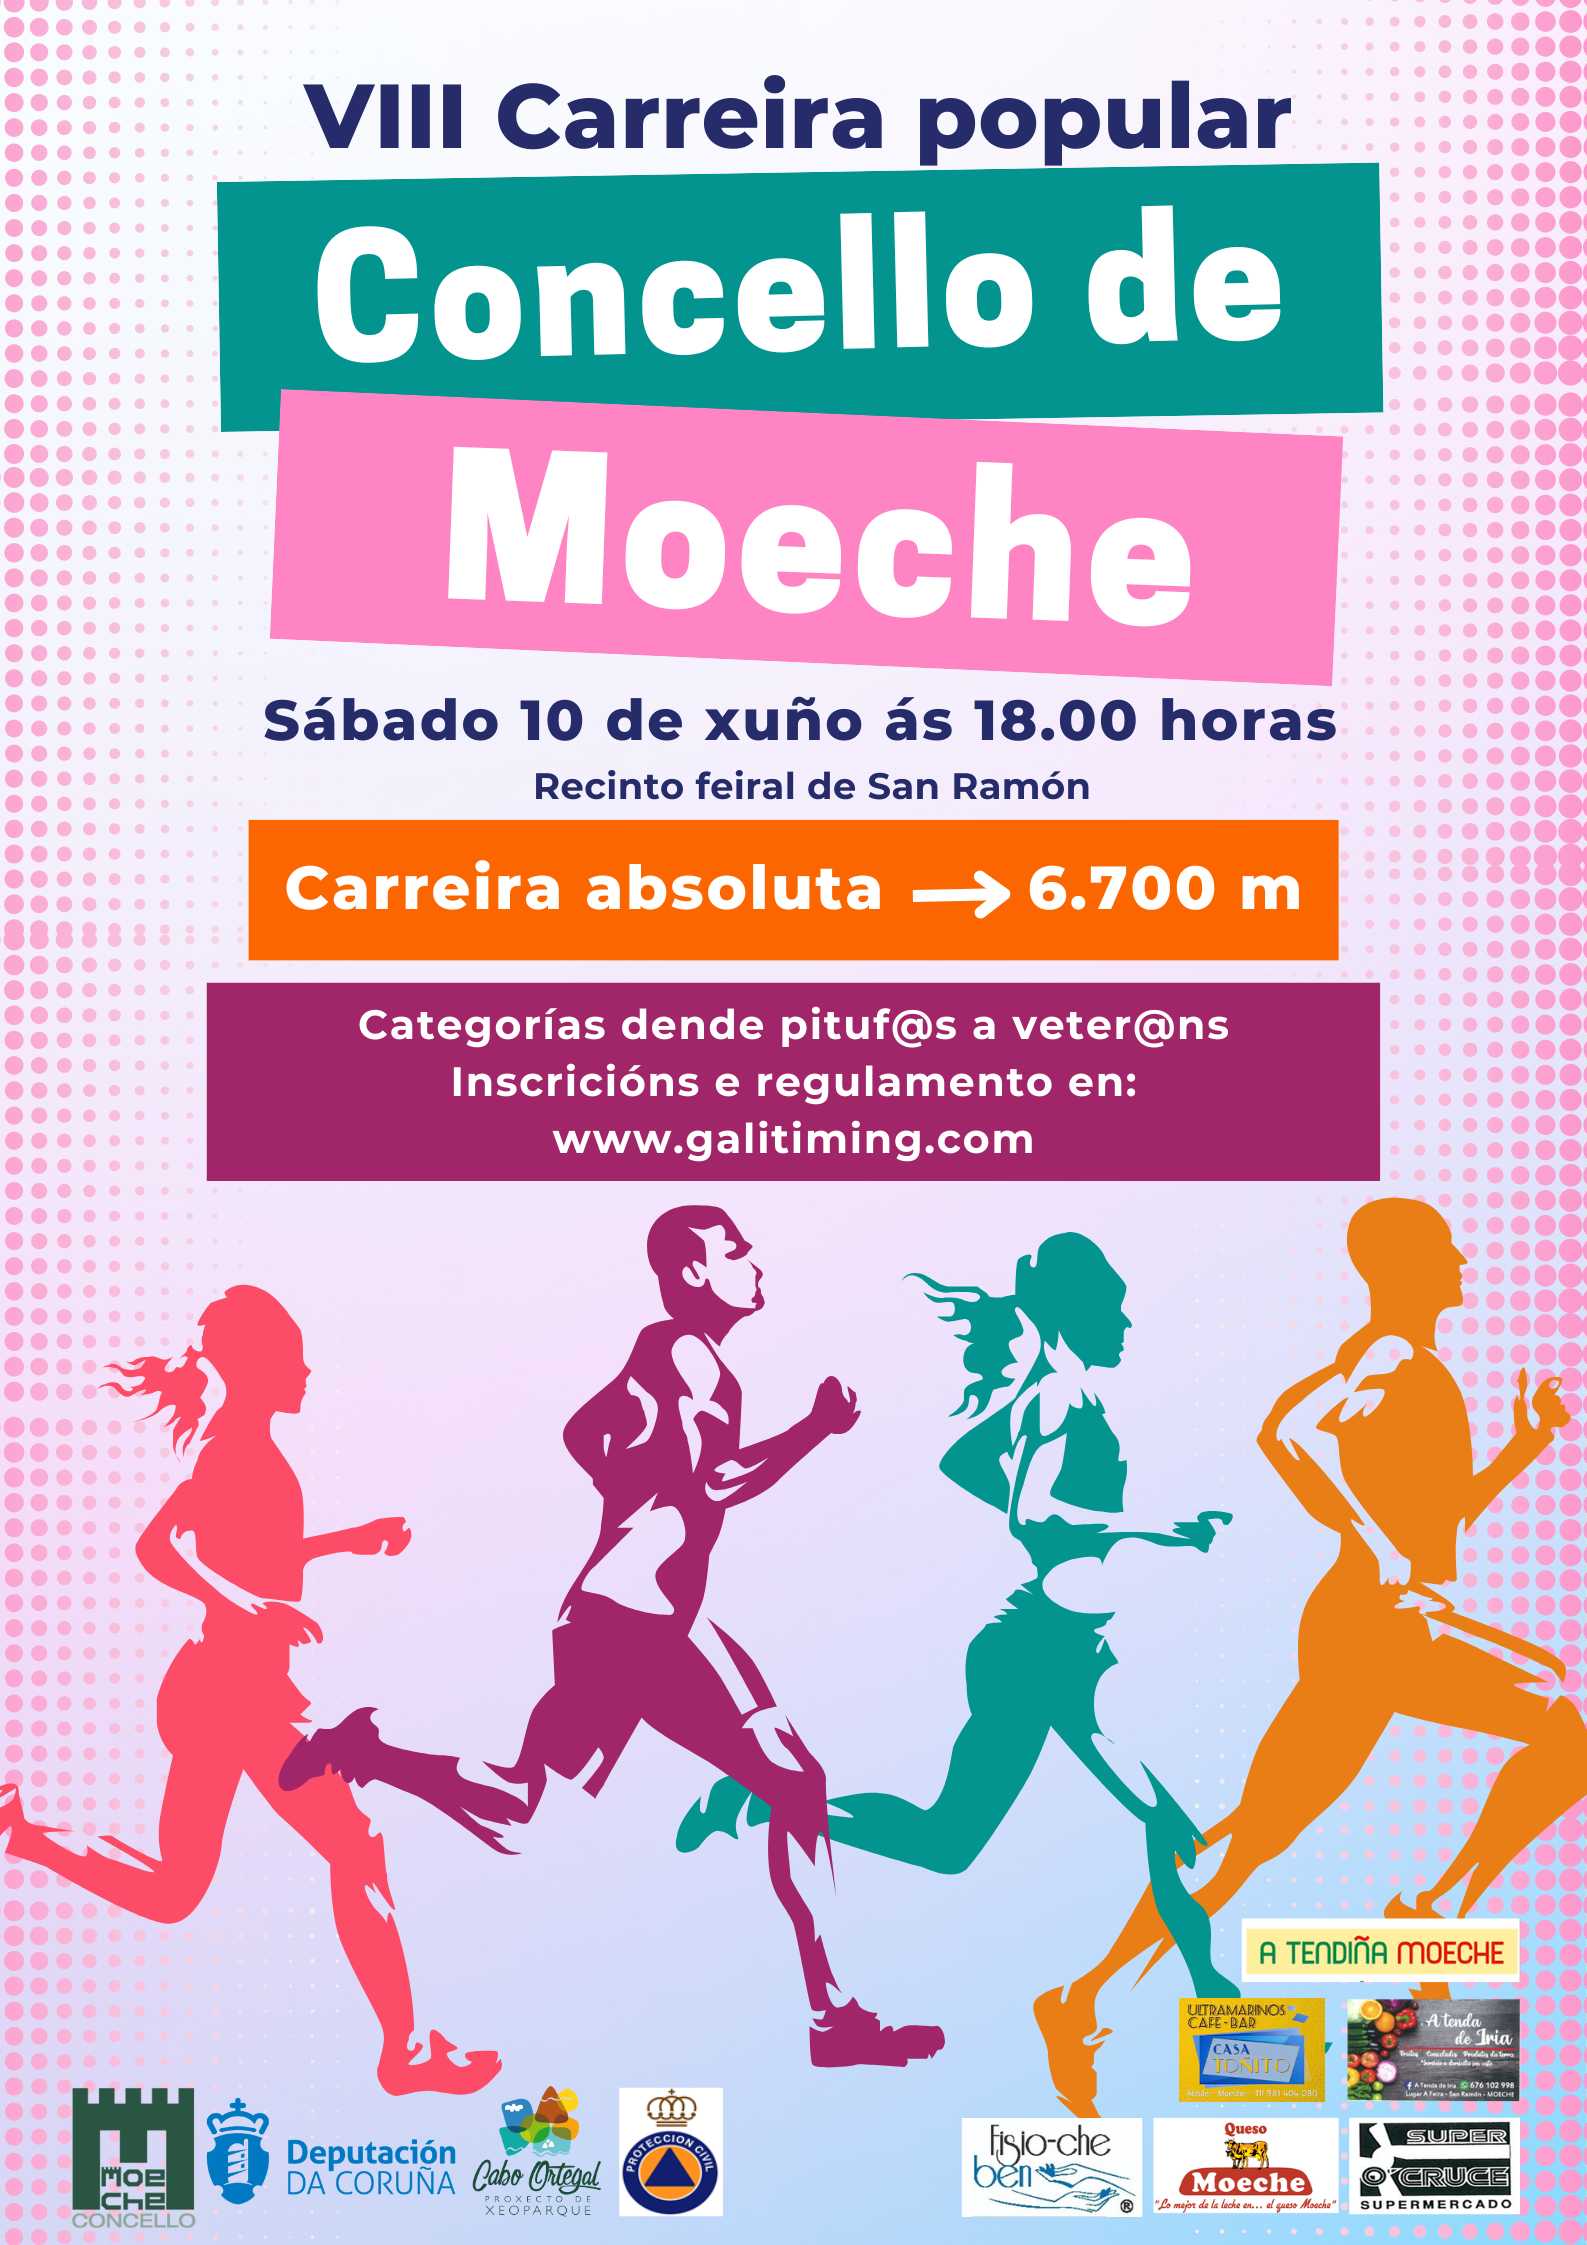 Event Poster VIII CARREIRA POPULAR CONCELLO DE MOECHE